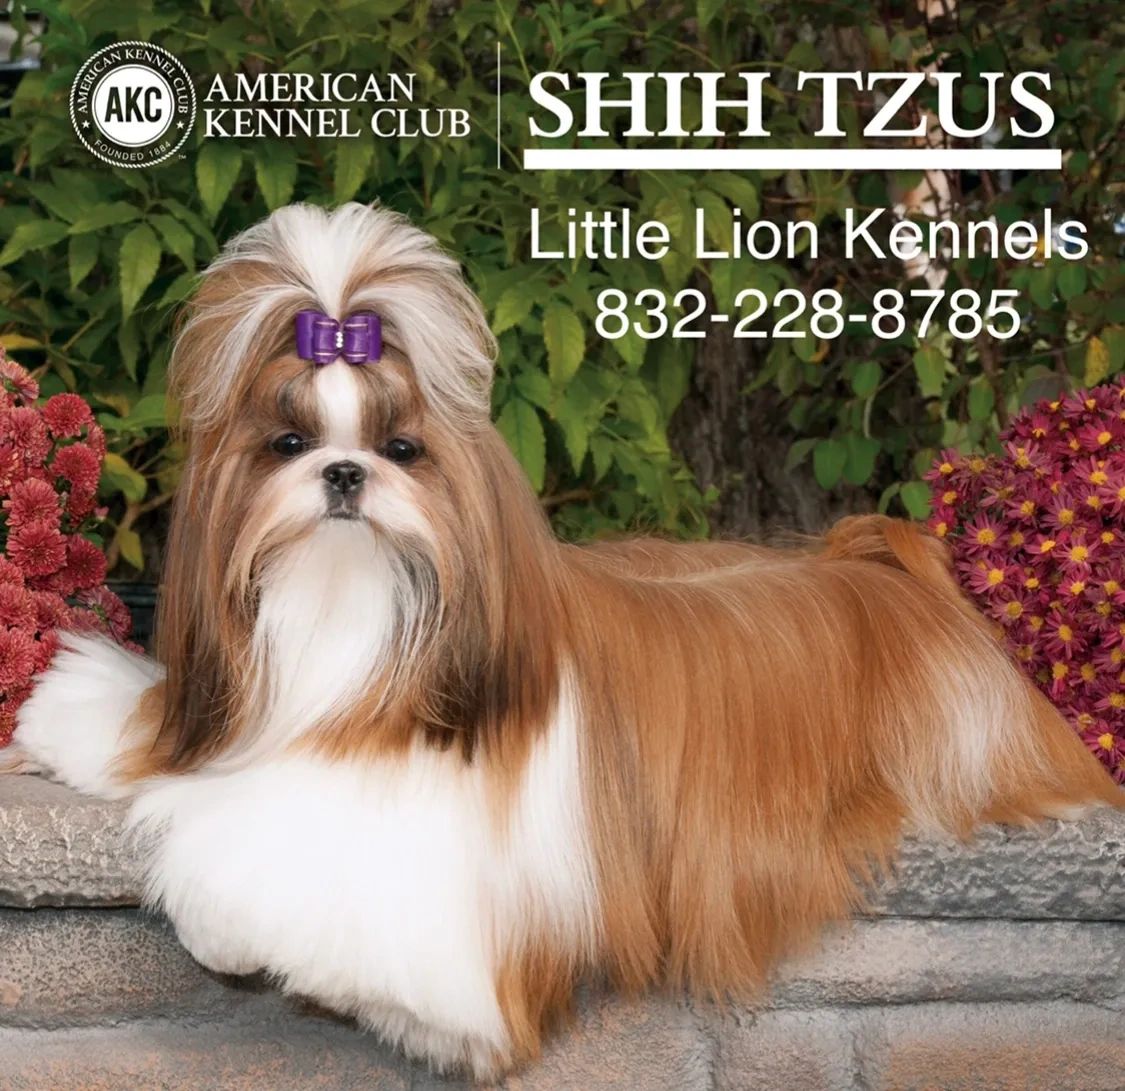 Akc Shih Tzu Puppies for Sale - Little Lion Kennels